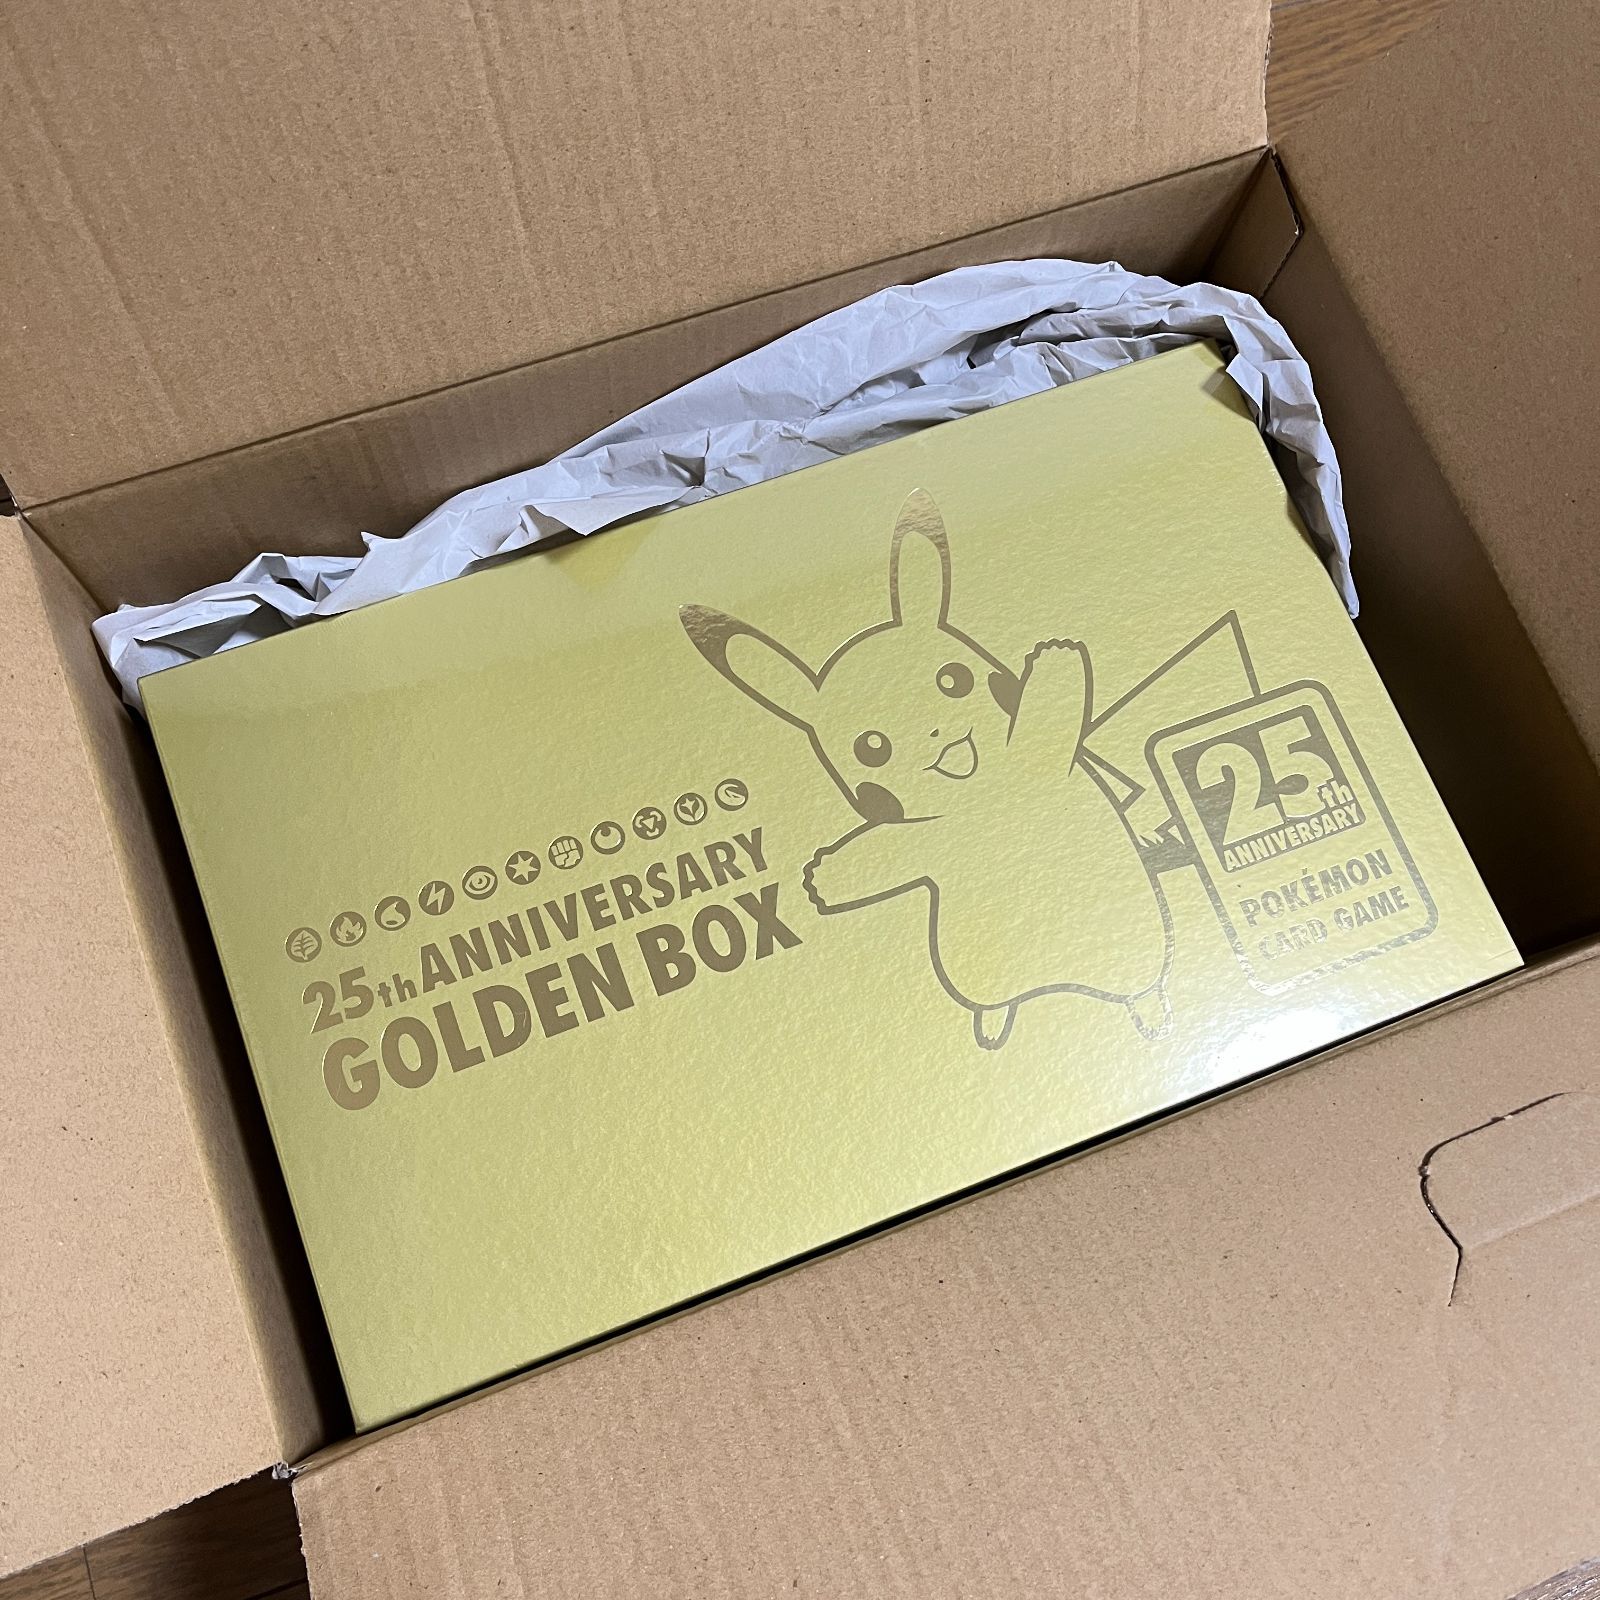 25th ANNIVERSARY GOLDEN BOX　新品未開封